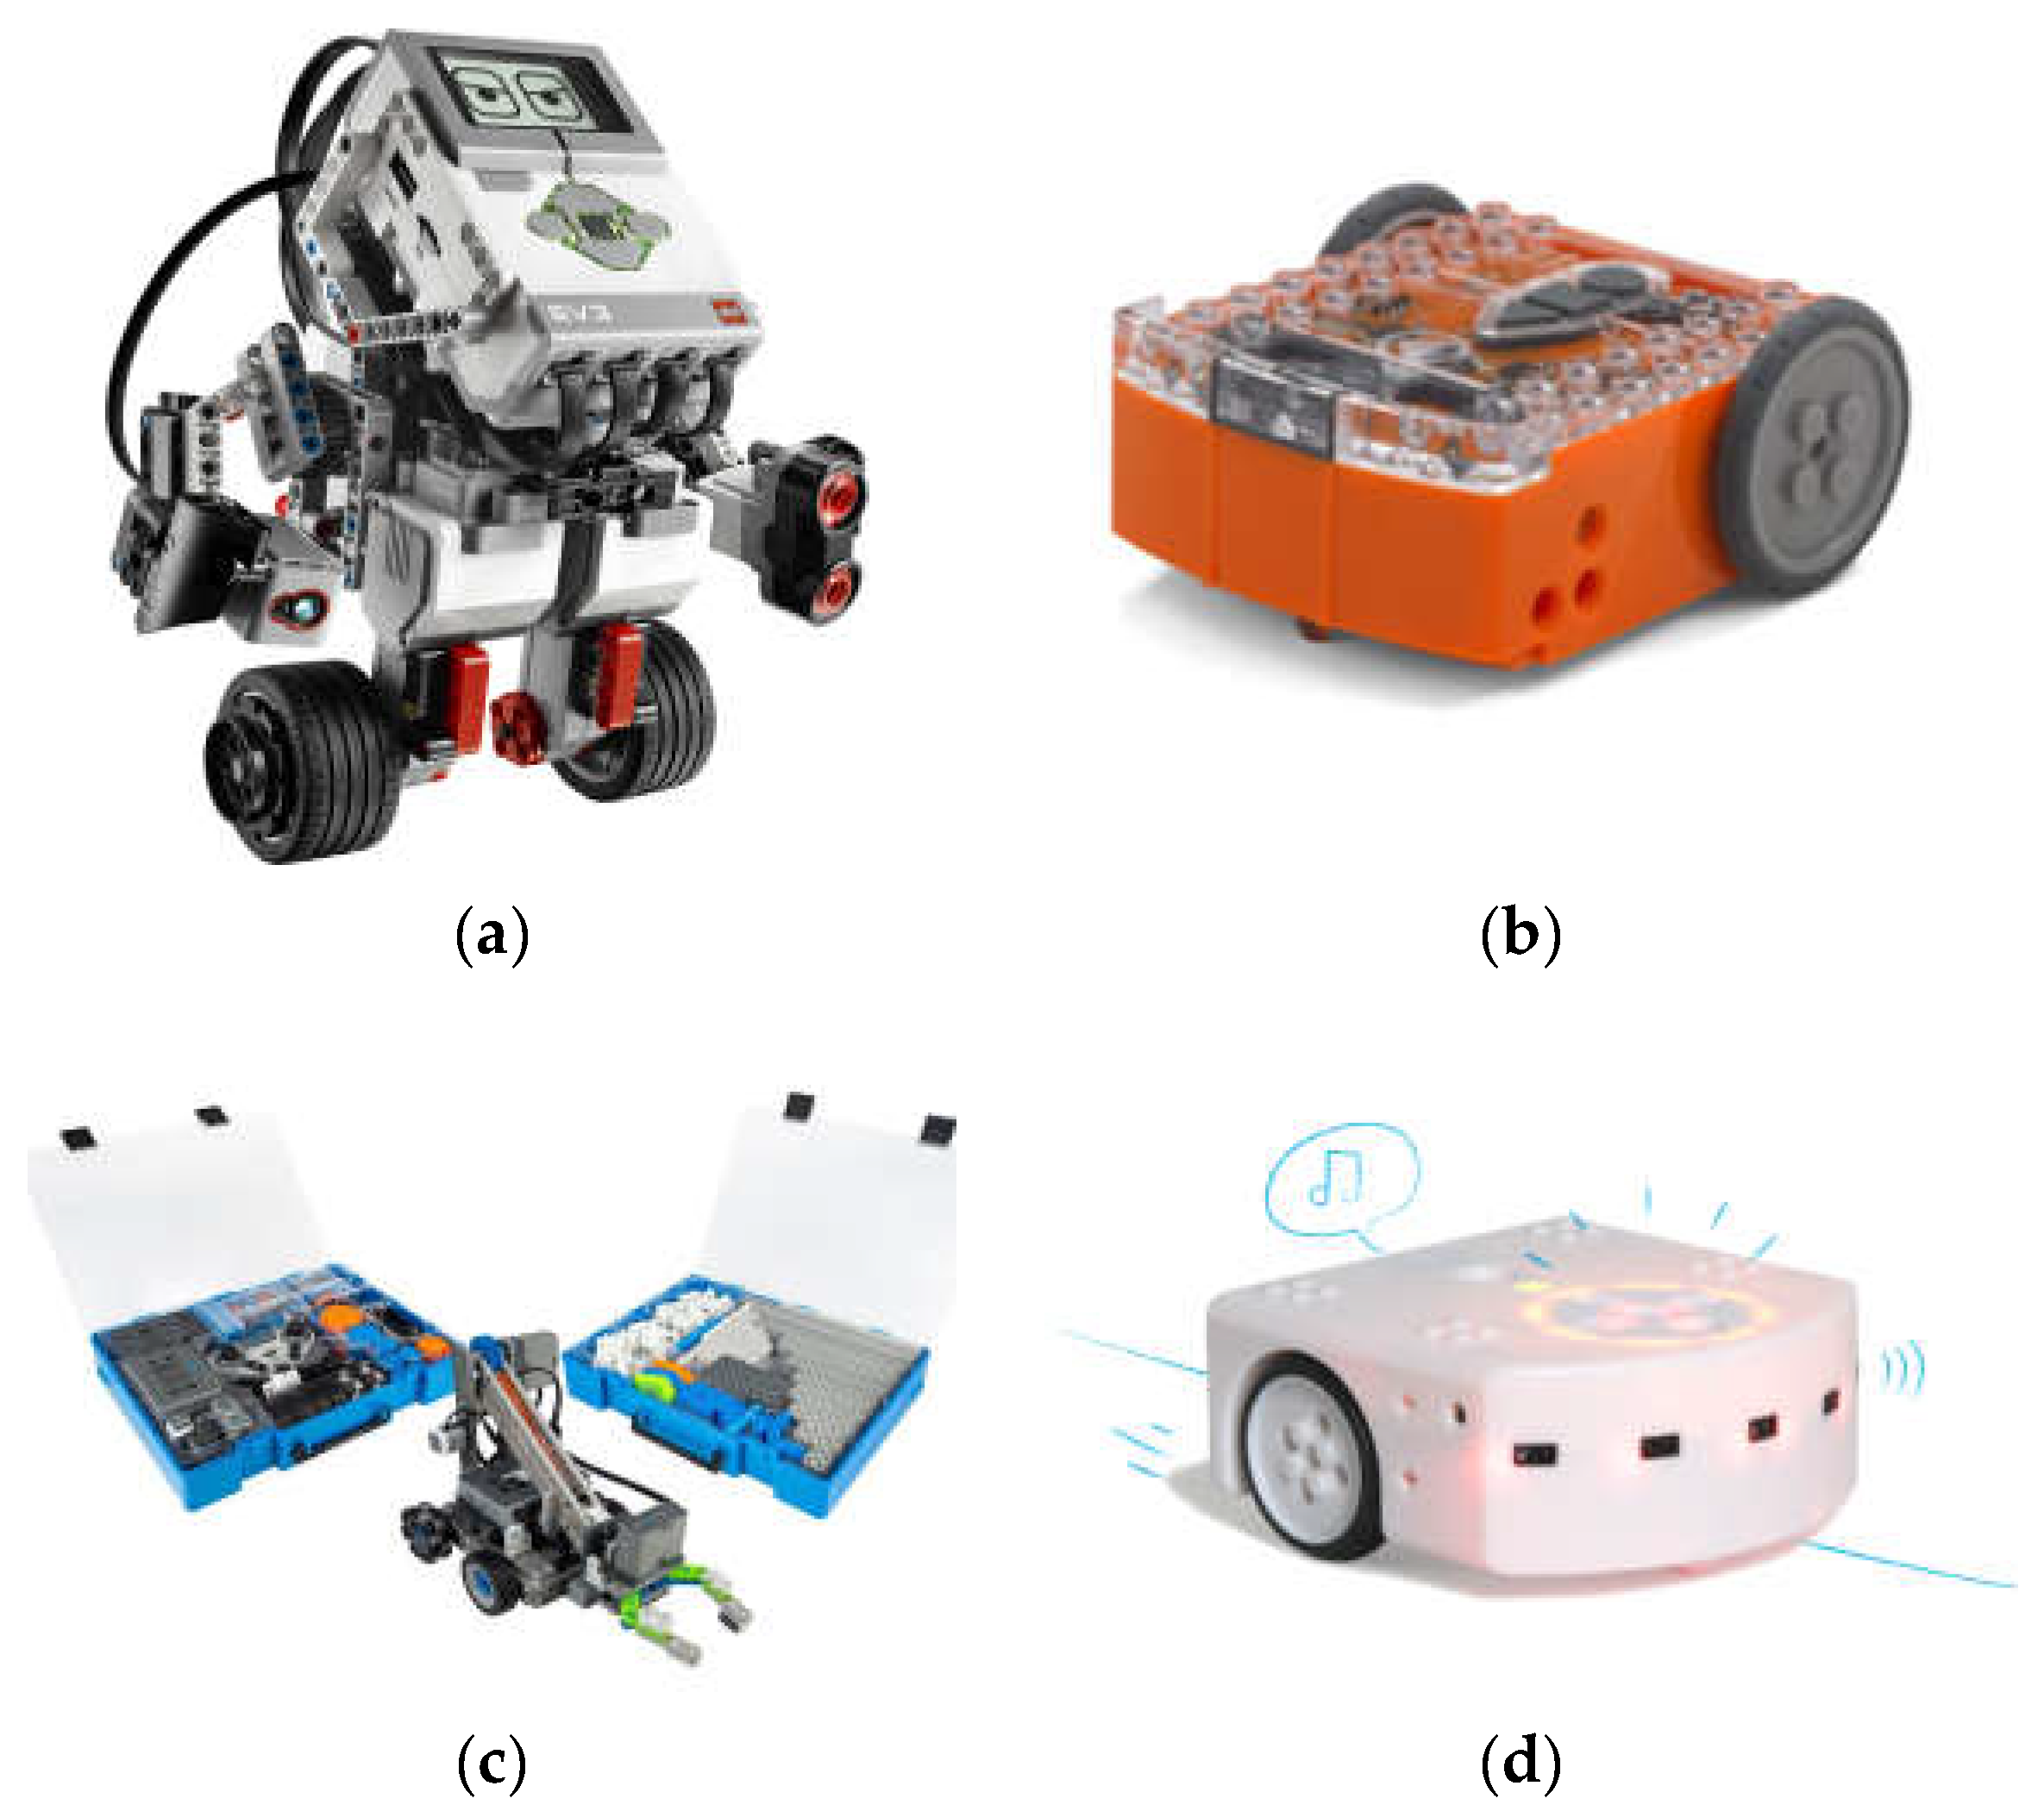 15 Coding Robots For Kids That Teach Coding The Fun Way - Teaching